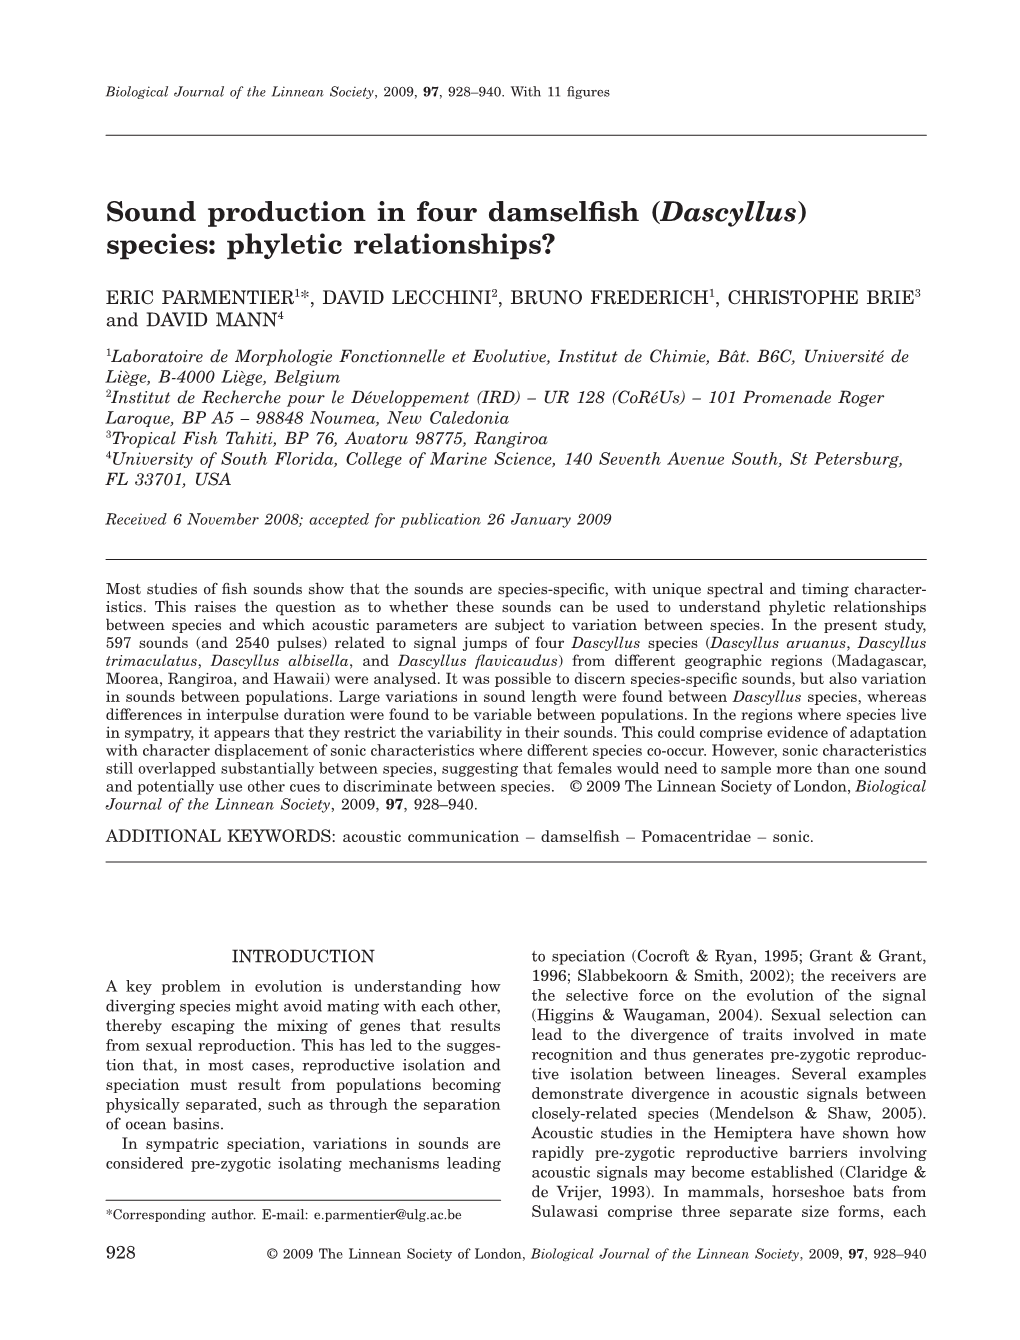 Sound Production in Four Damselfish (Dascyllus) Species